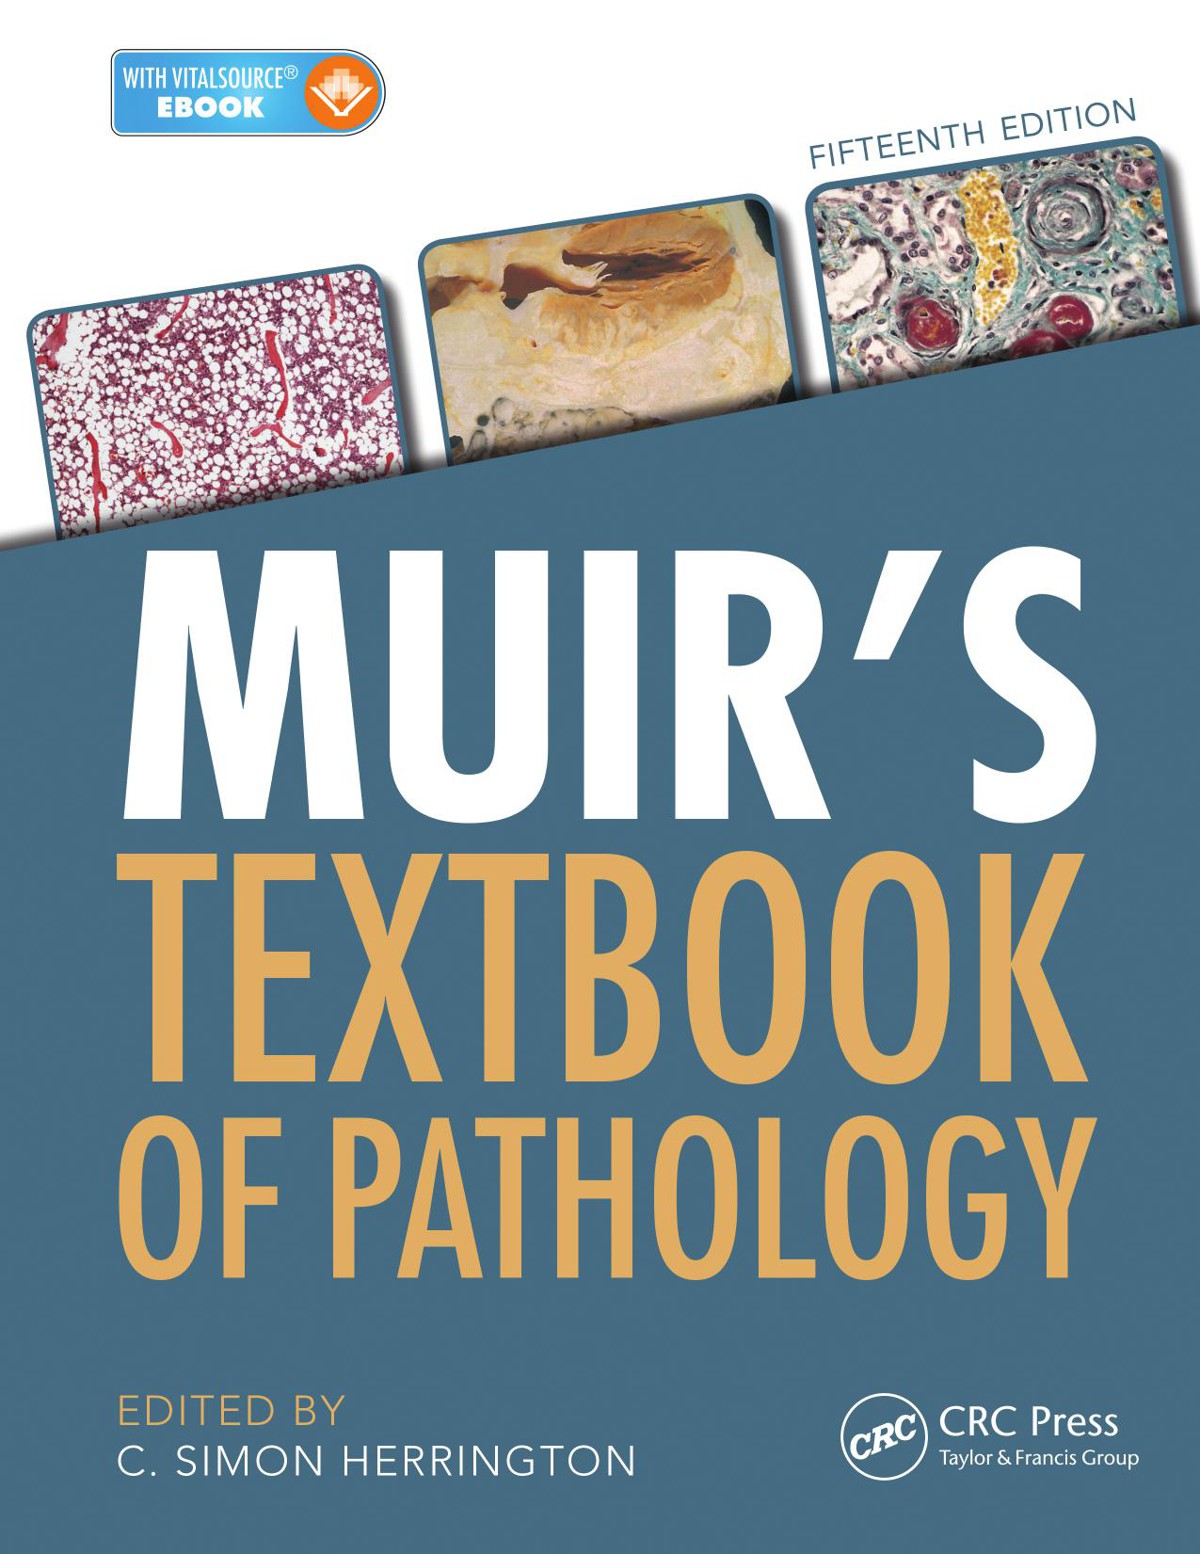 Muir's Textbook of Pathology 15th Edition PDF